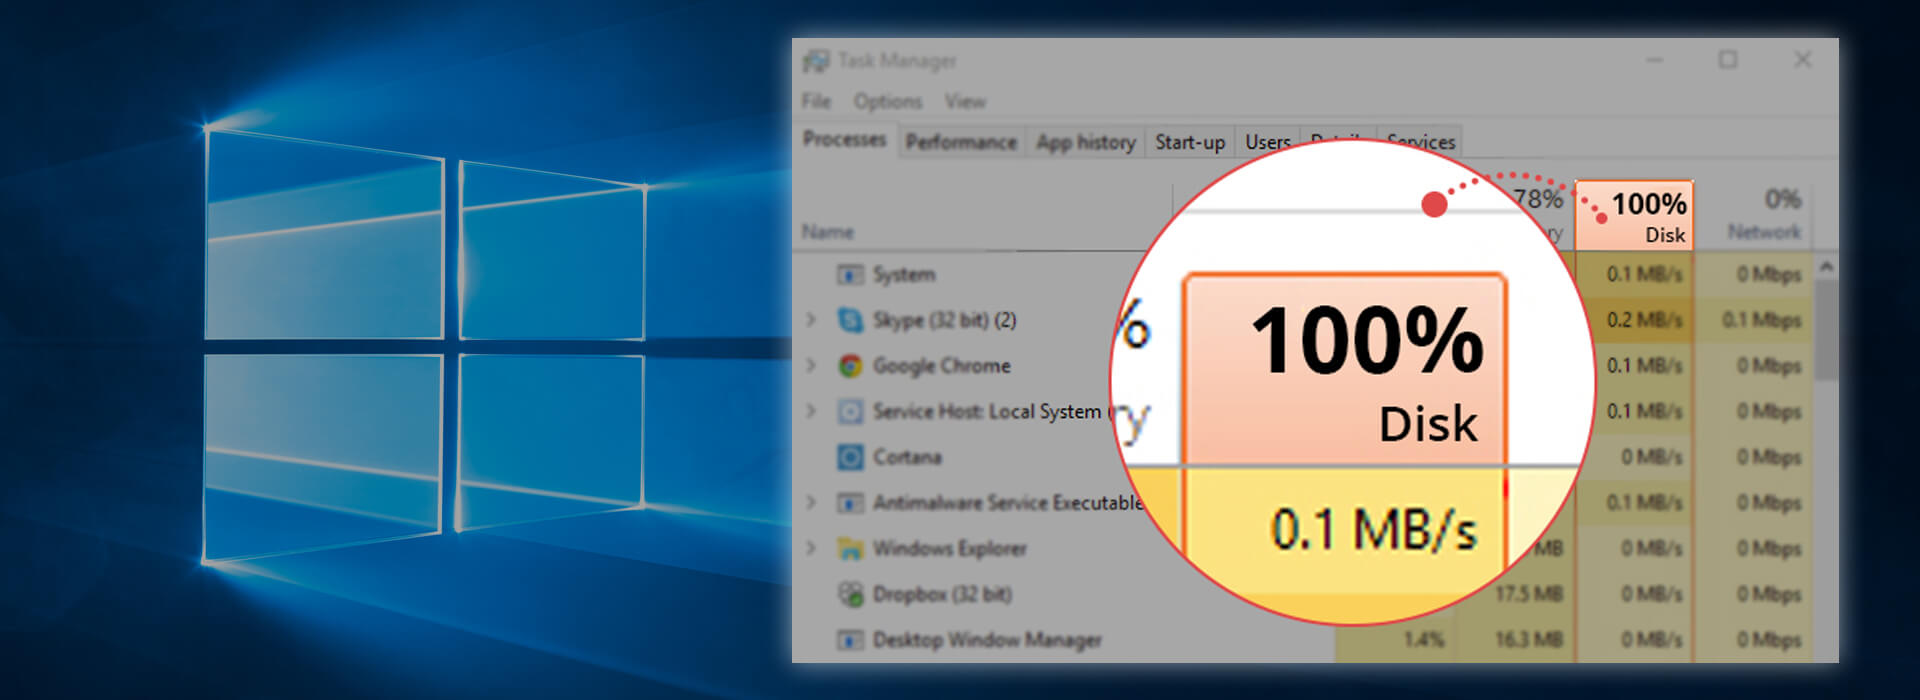 hard disk usage 100 windows 10